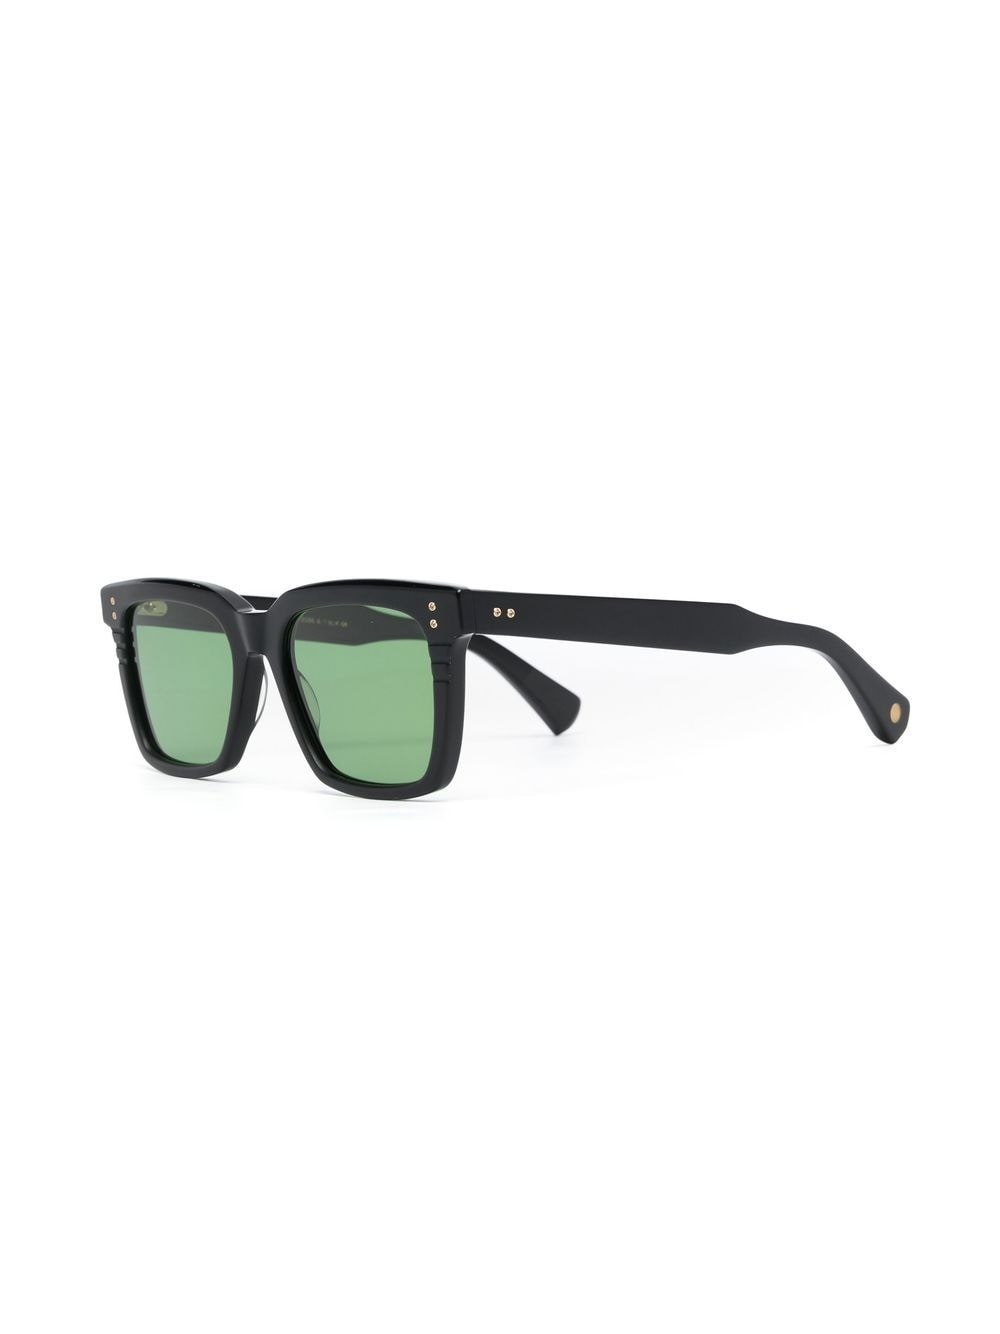 wayfarer-frame sunglasses - 2